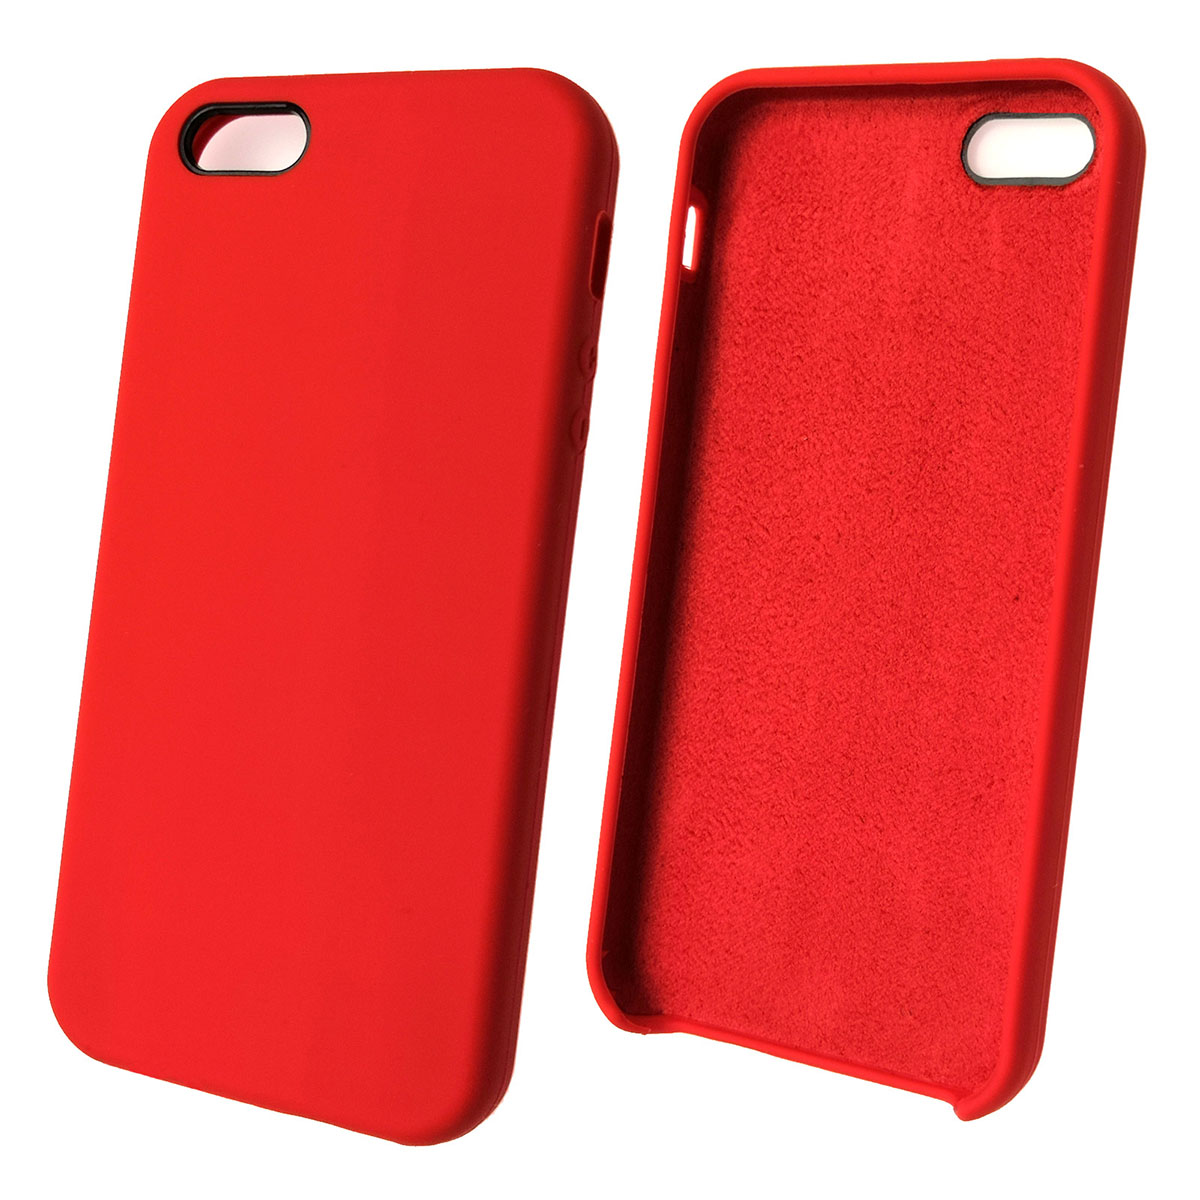 Чехол накладка Silicon Case для APPLE iPhone 5, 5S, SE, силикон, бархат, цвет красный.